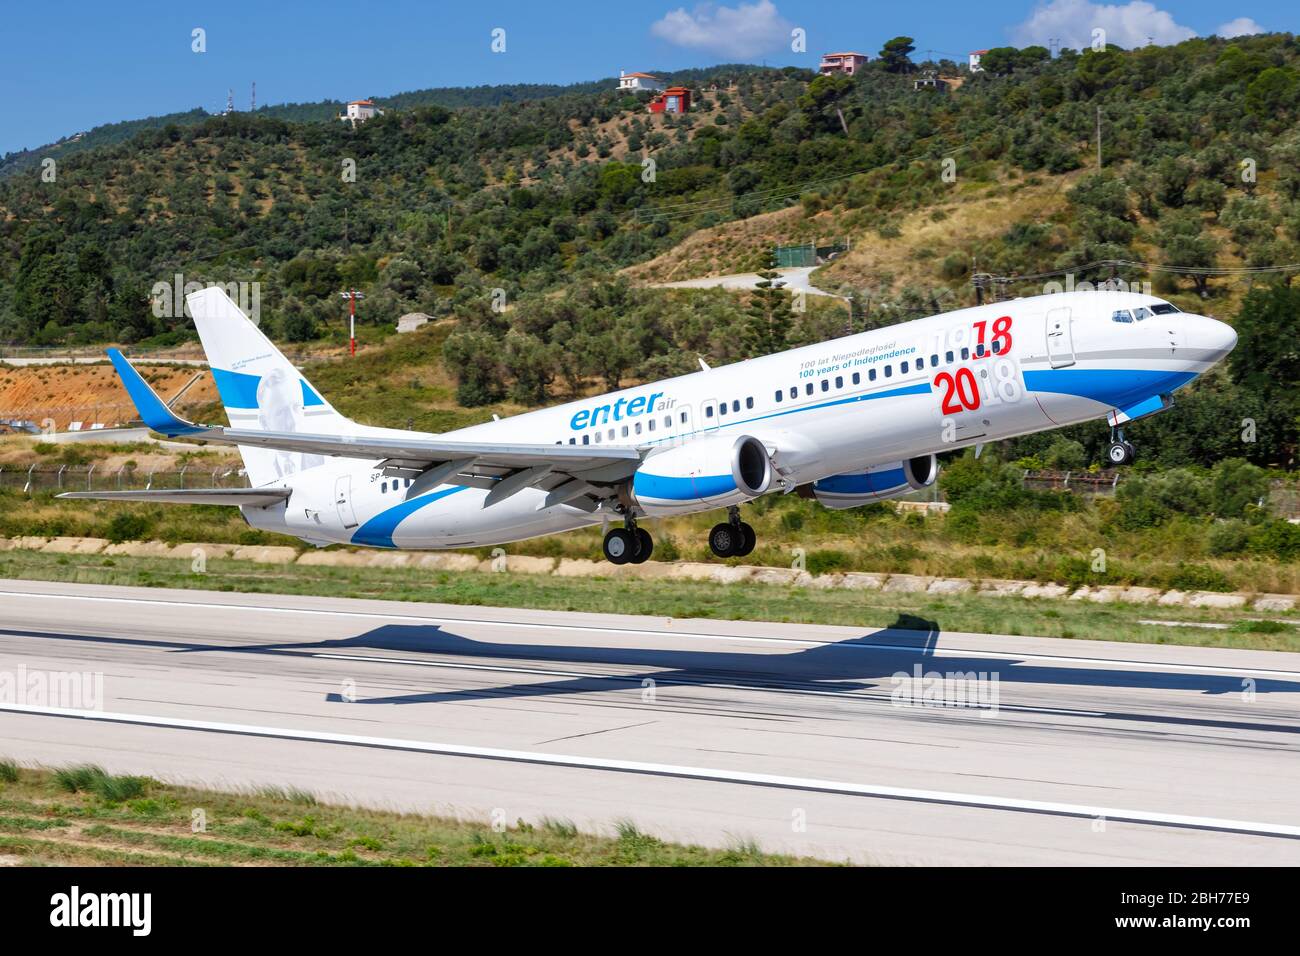 Skiathos, Greece – July 30, 2019: Enter Air Boeing 737-800 airplane at Skiathos airport (JSI) in Greece. Stock Photo